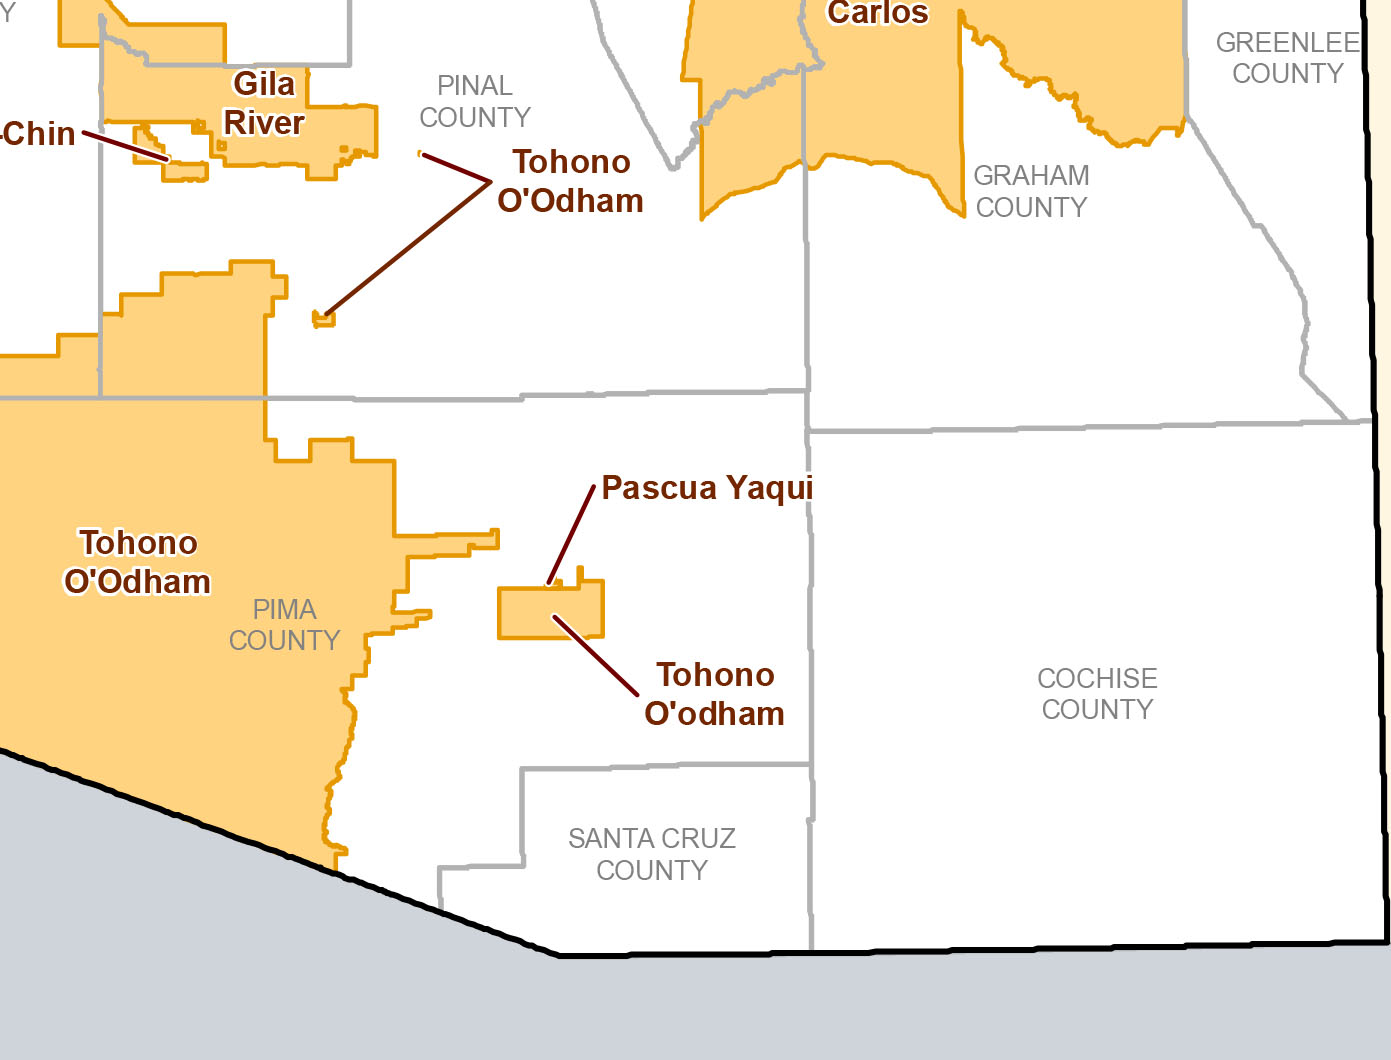 Senate votes to kill plan to realign Santa Cruz-Cochise county boundary